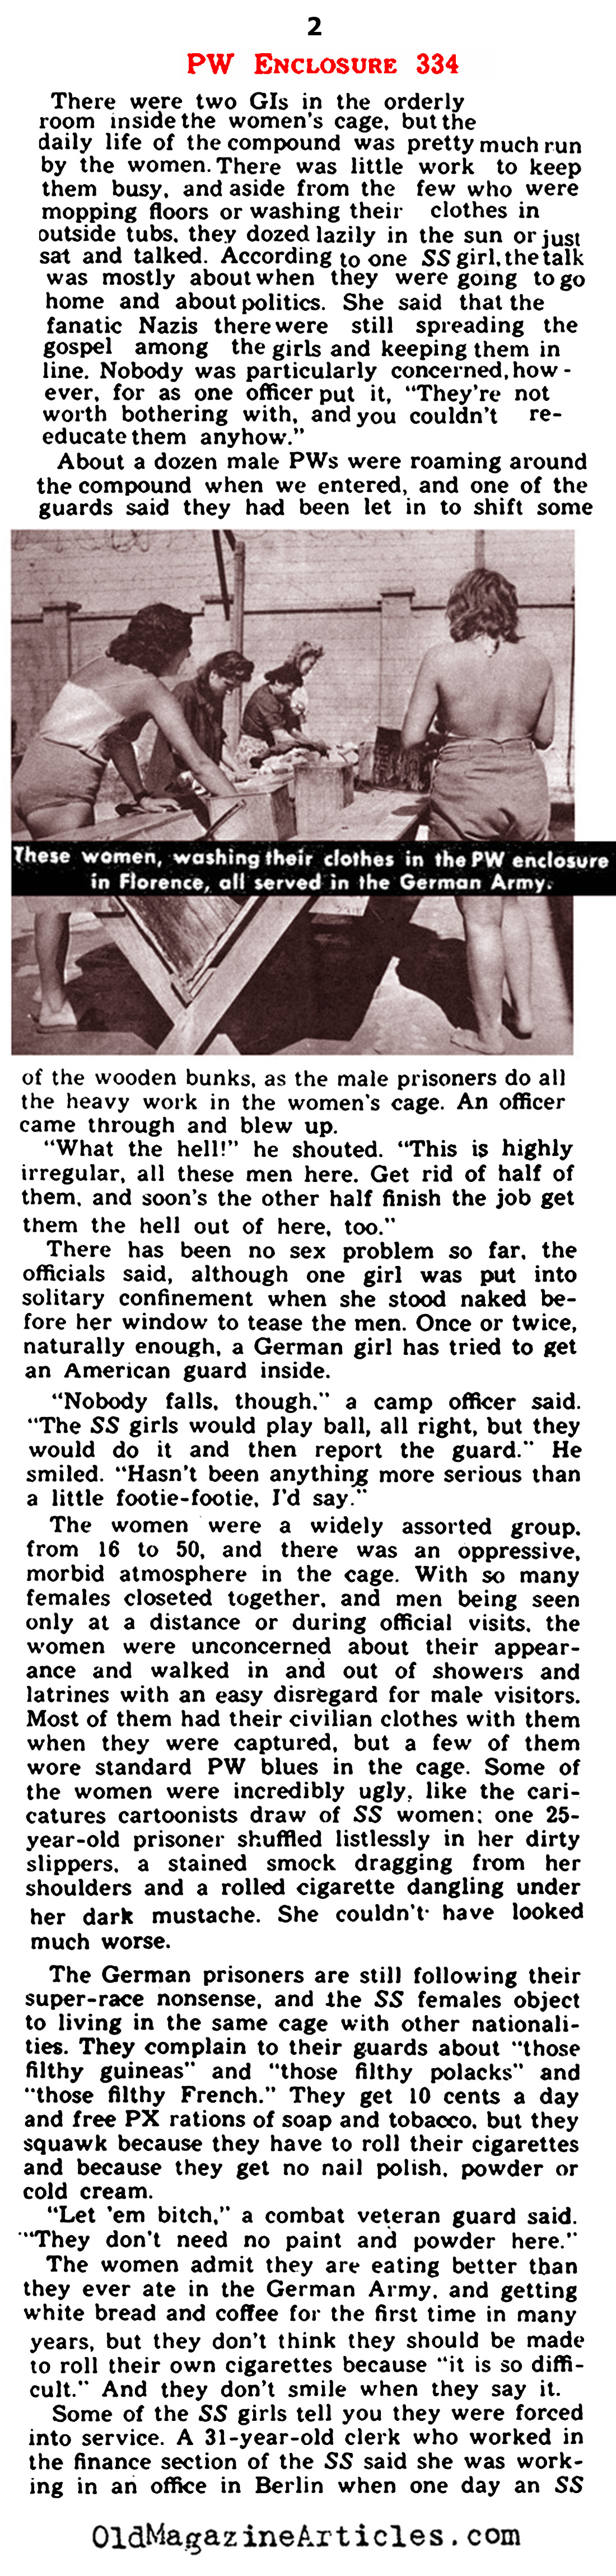 P.O.W. Camp for the S.S. Women (Yank Magazine, 1945)